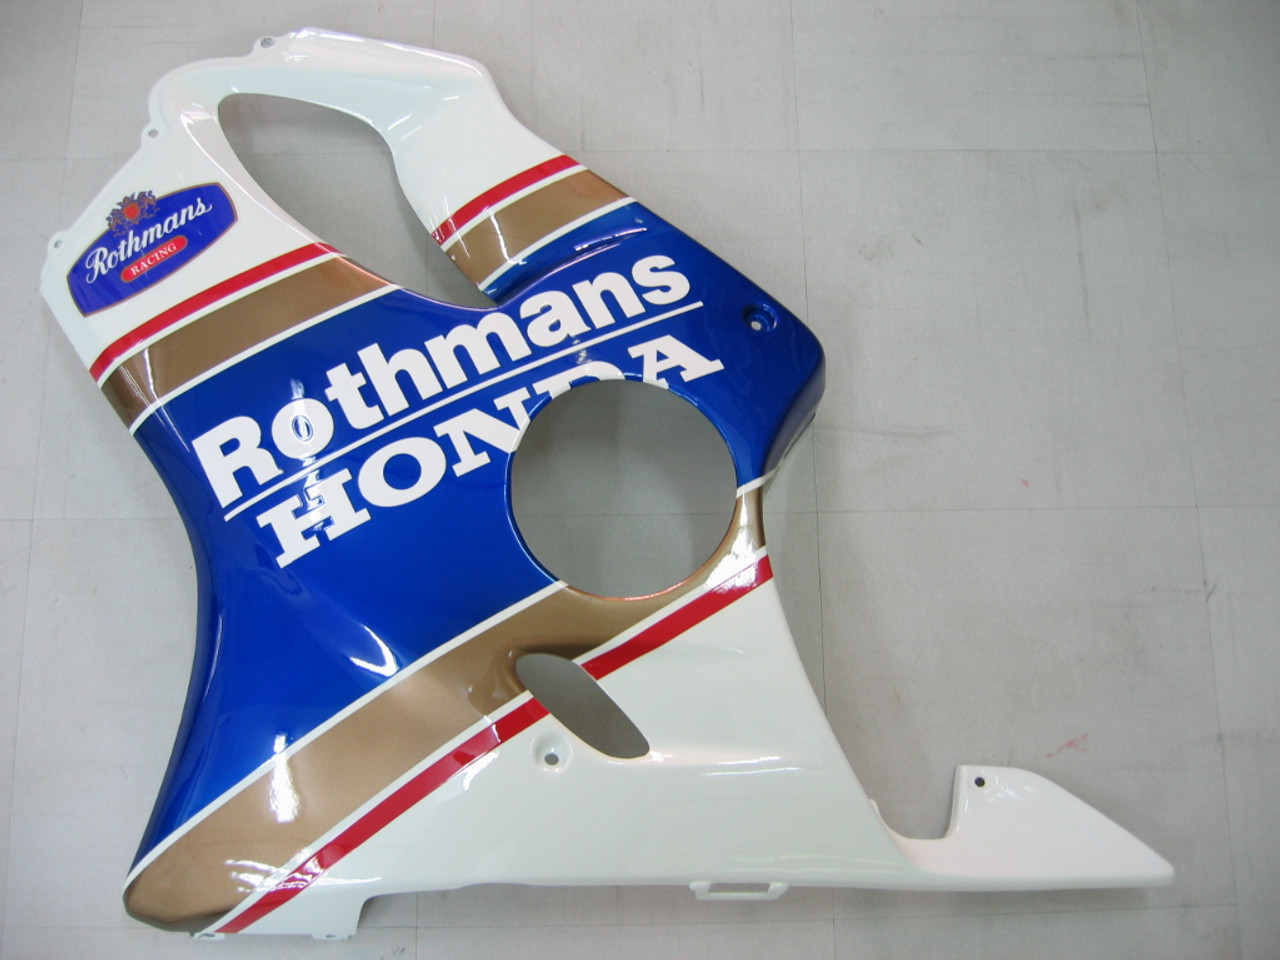 Amotopart Fairings Honda CBR 600 F4i White Rothmans Honda Racing (2001-2003)